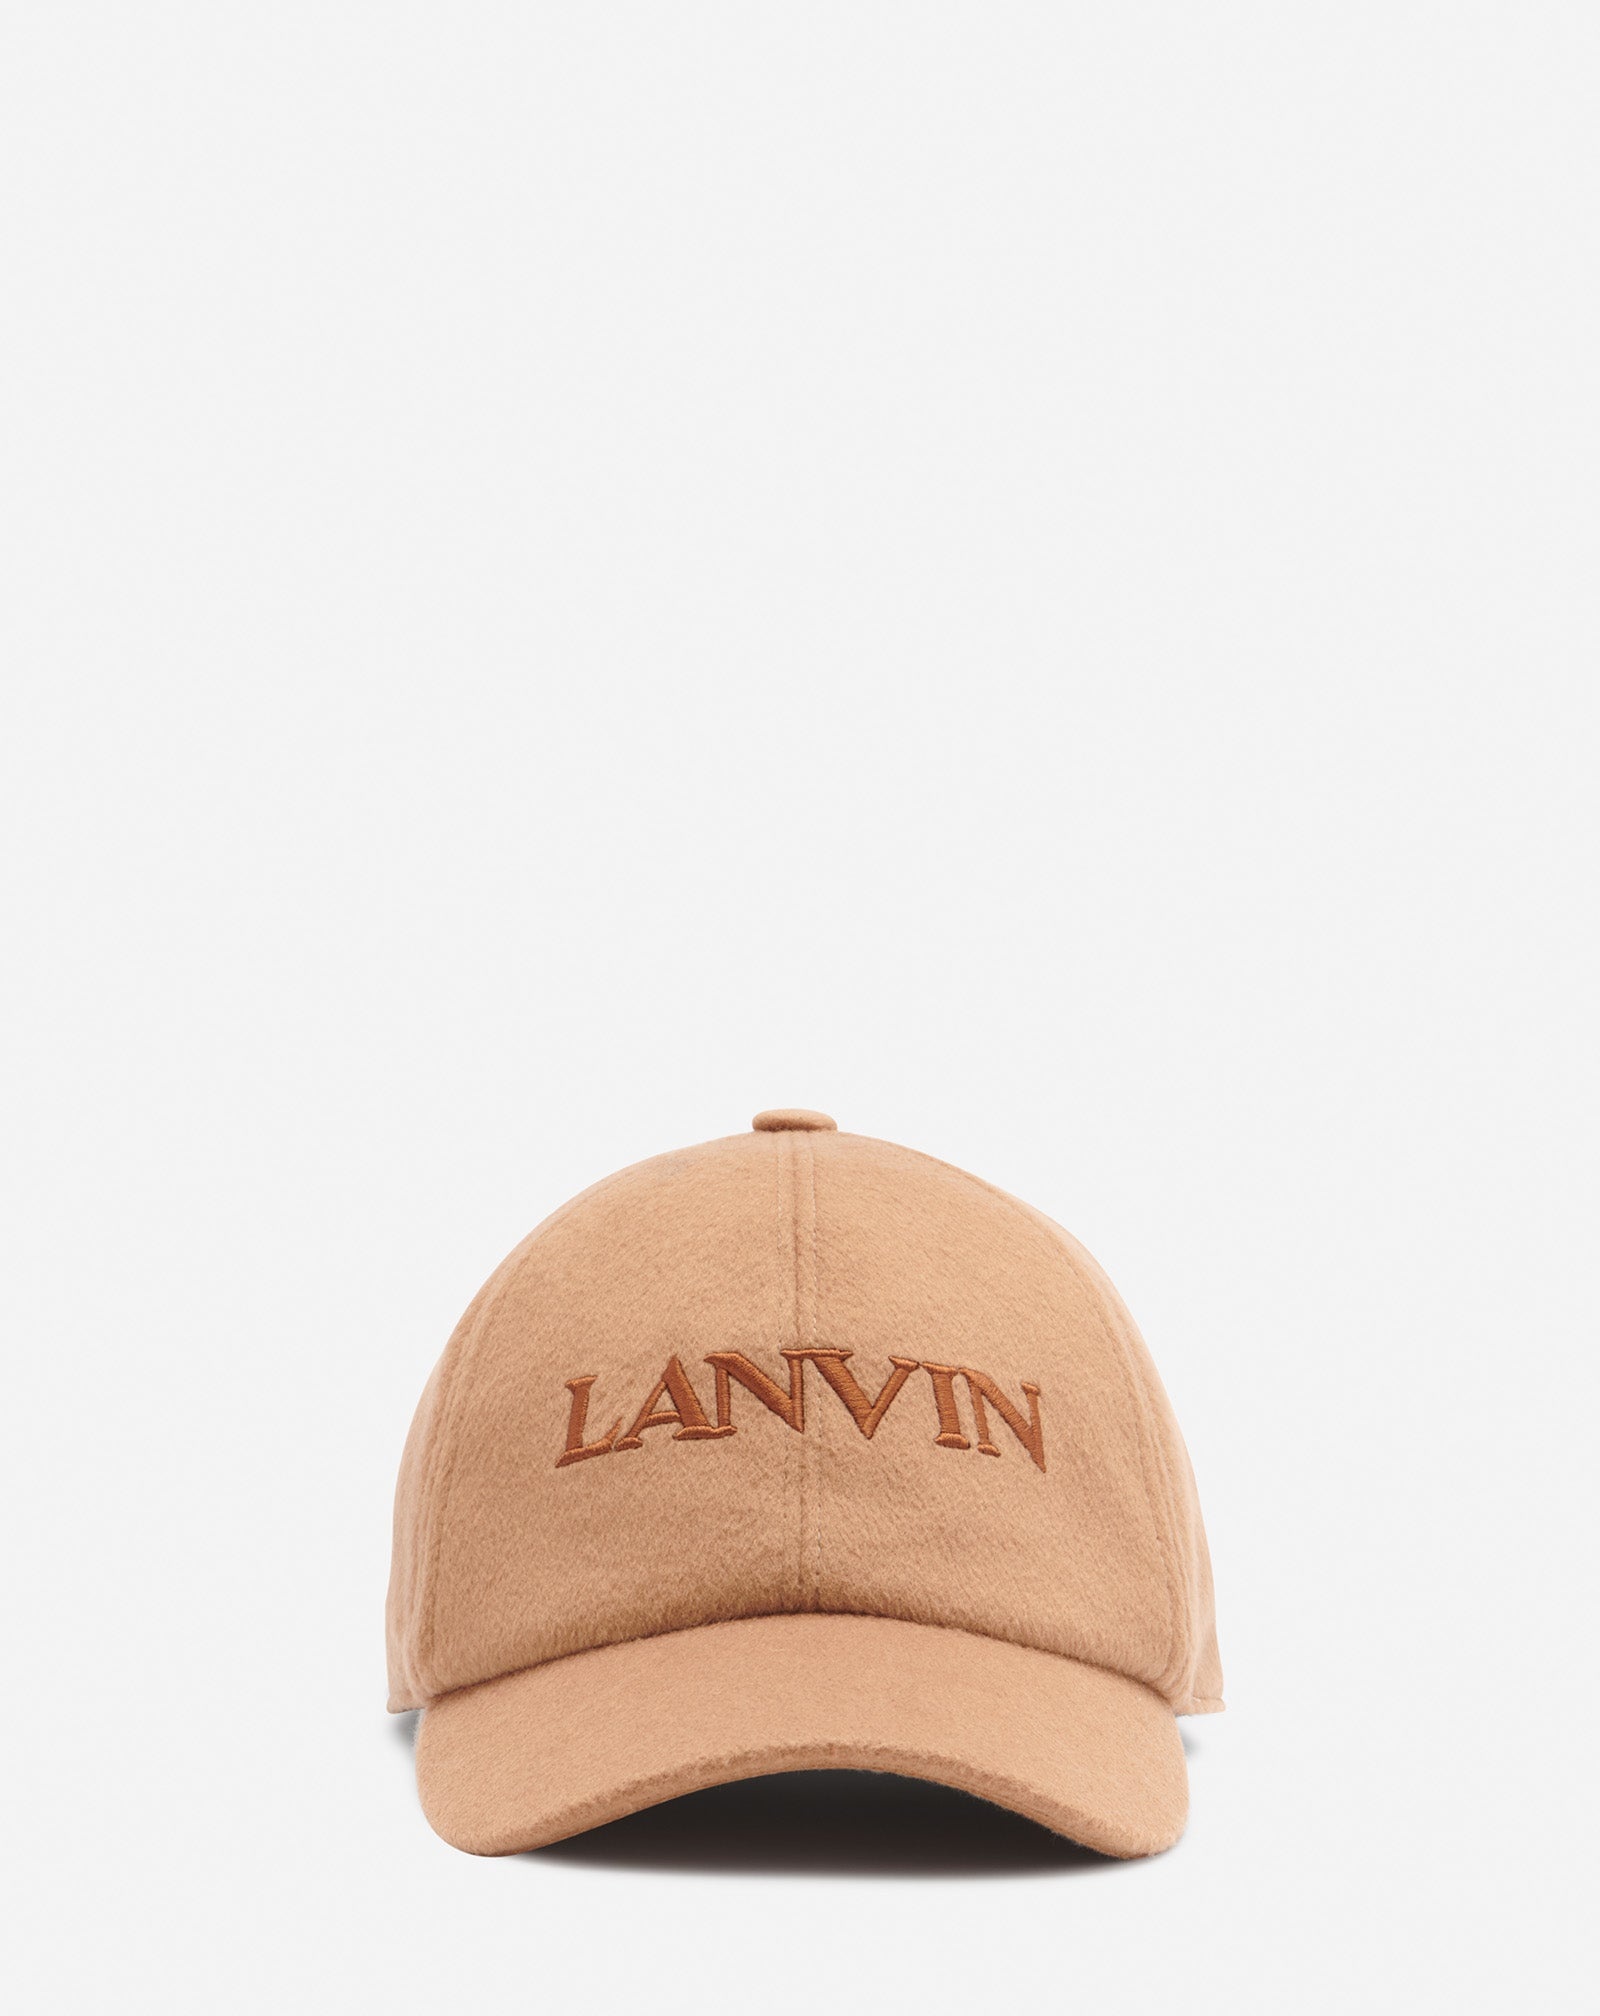 LANVIN WOOL CAP - 1